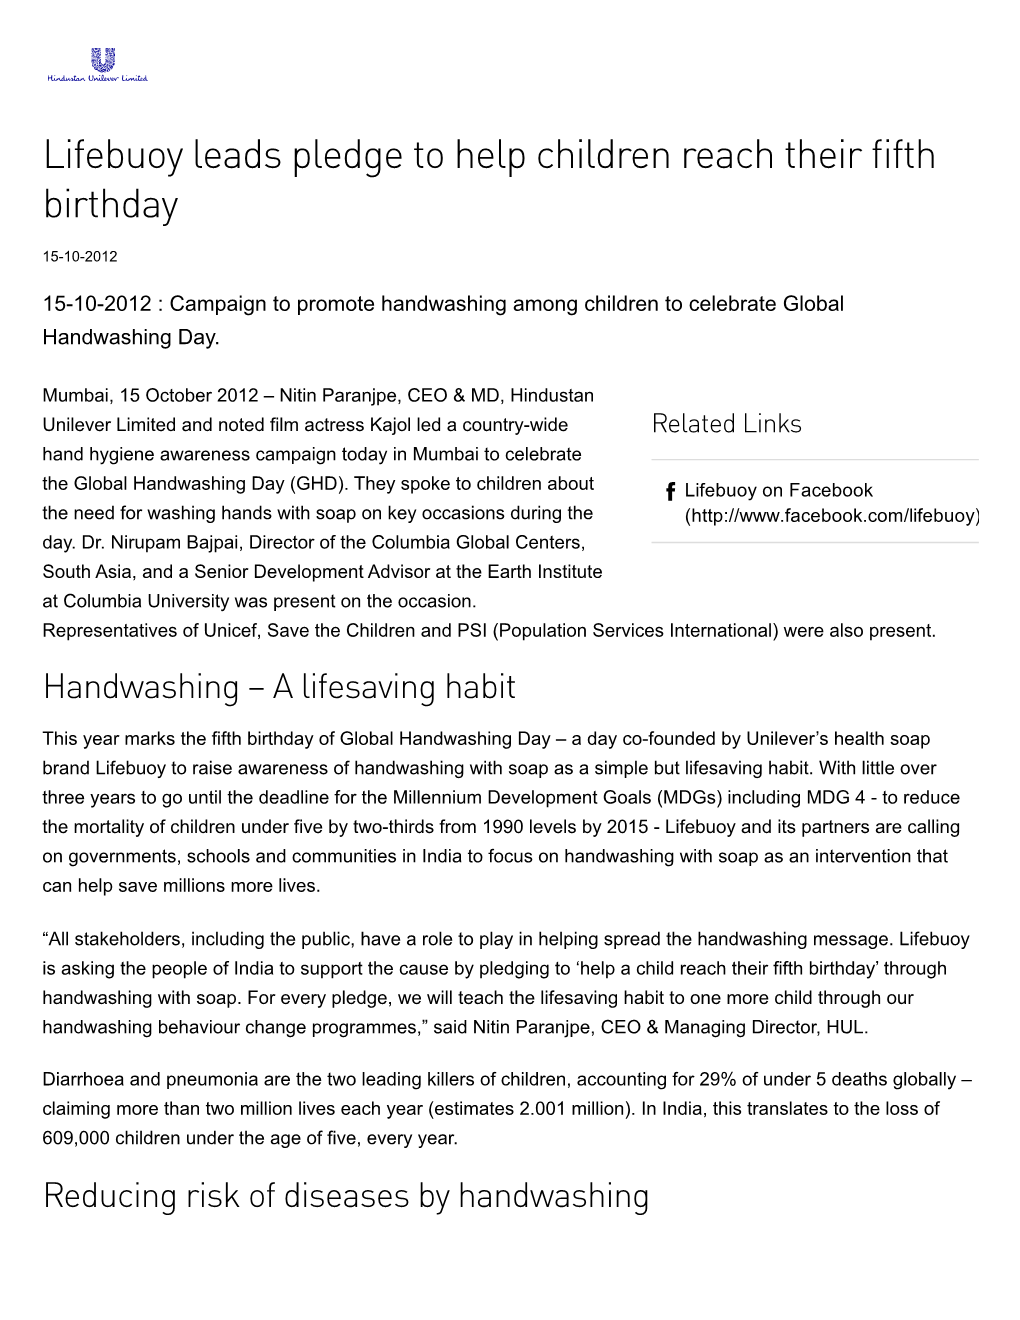 Lifebuoy Leads Pledge to Help Children Reach Their Fifth Birthday